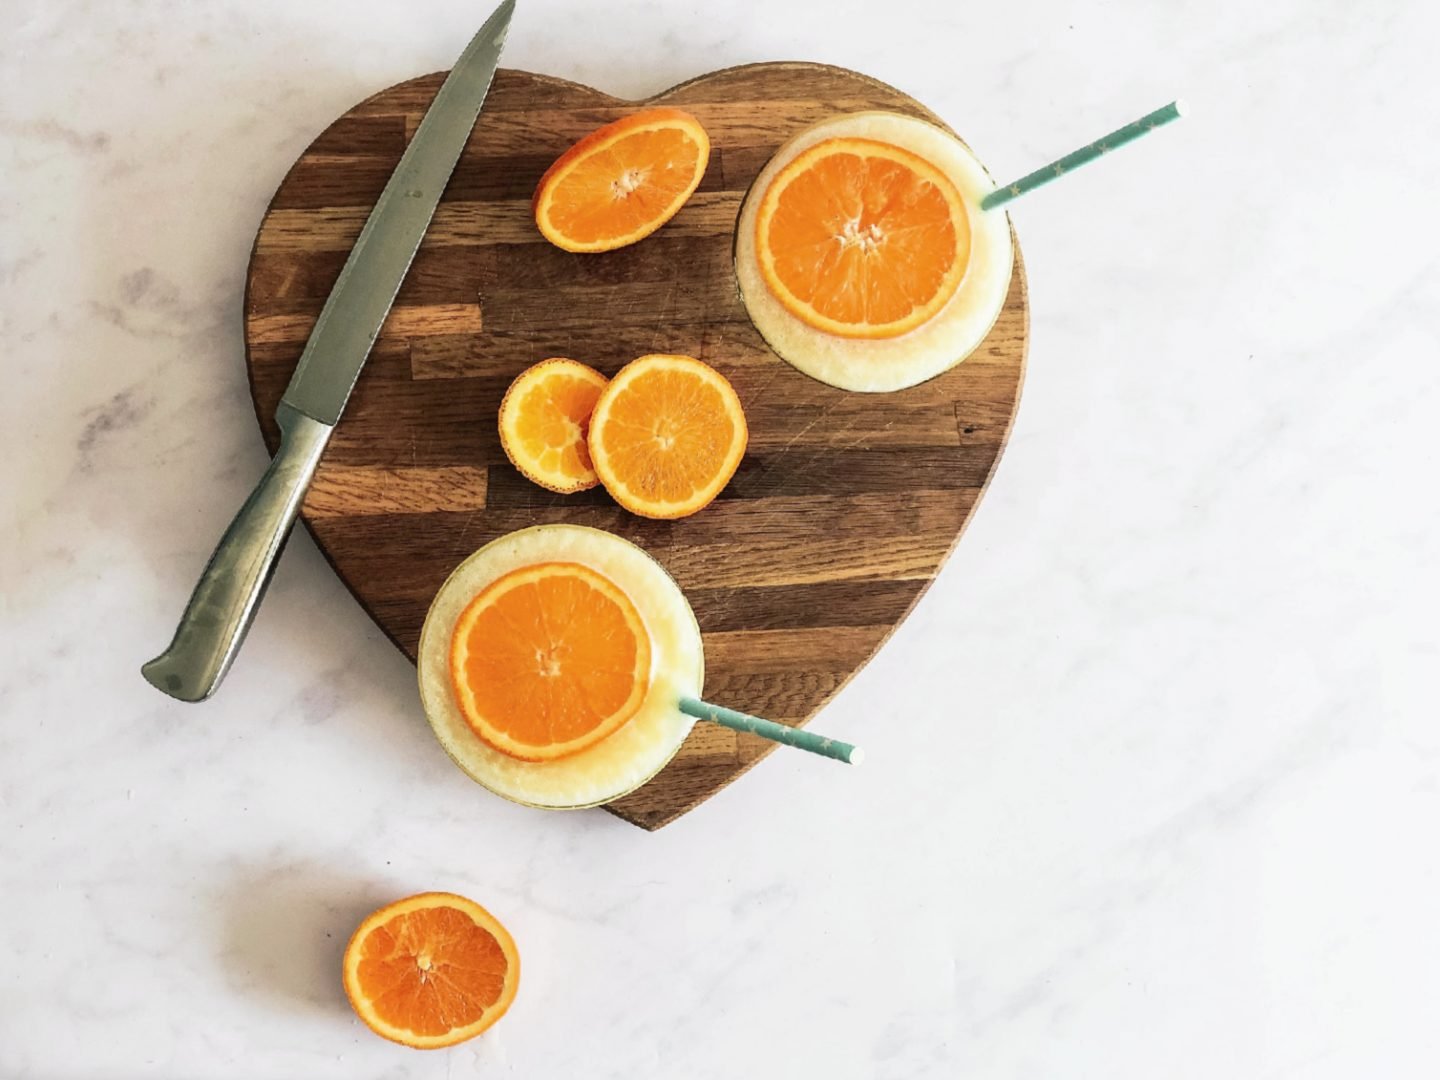 How to make a slush with oranges